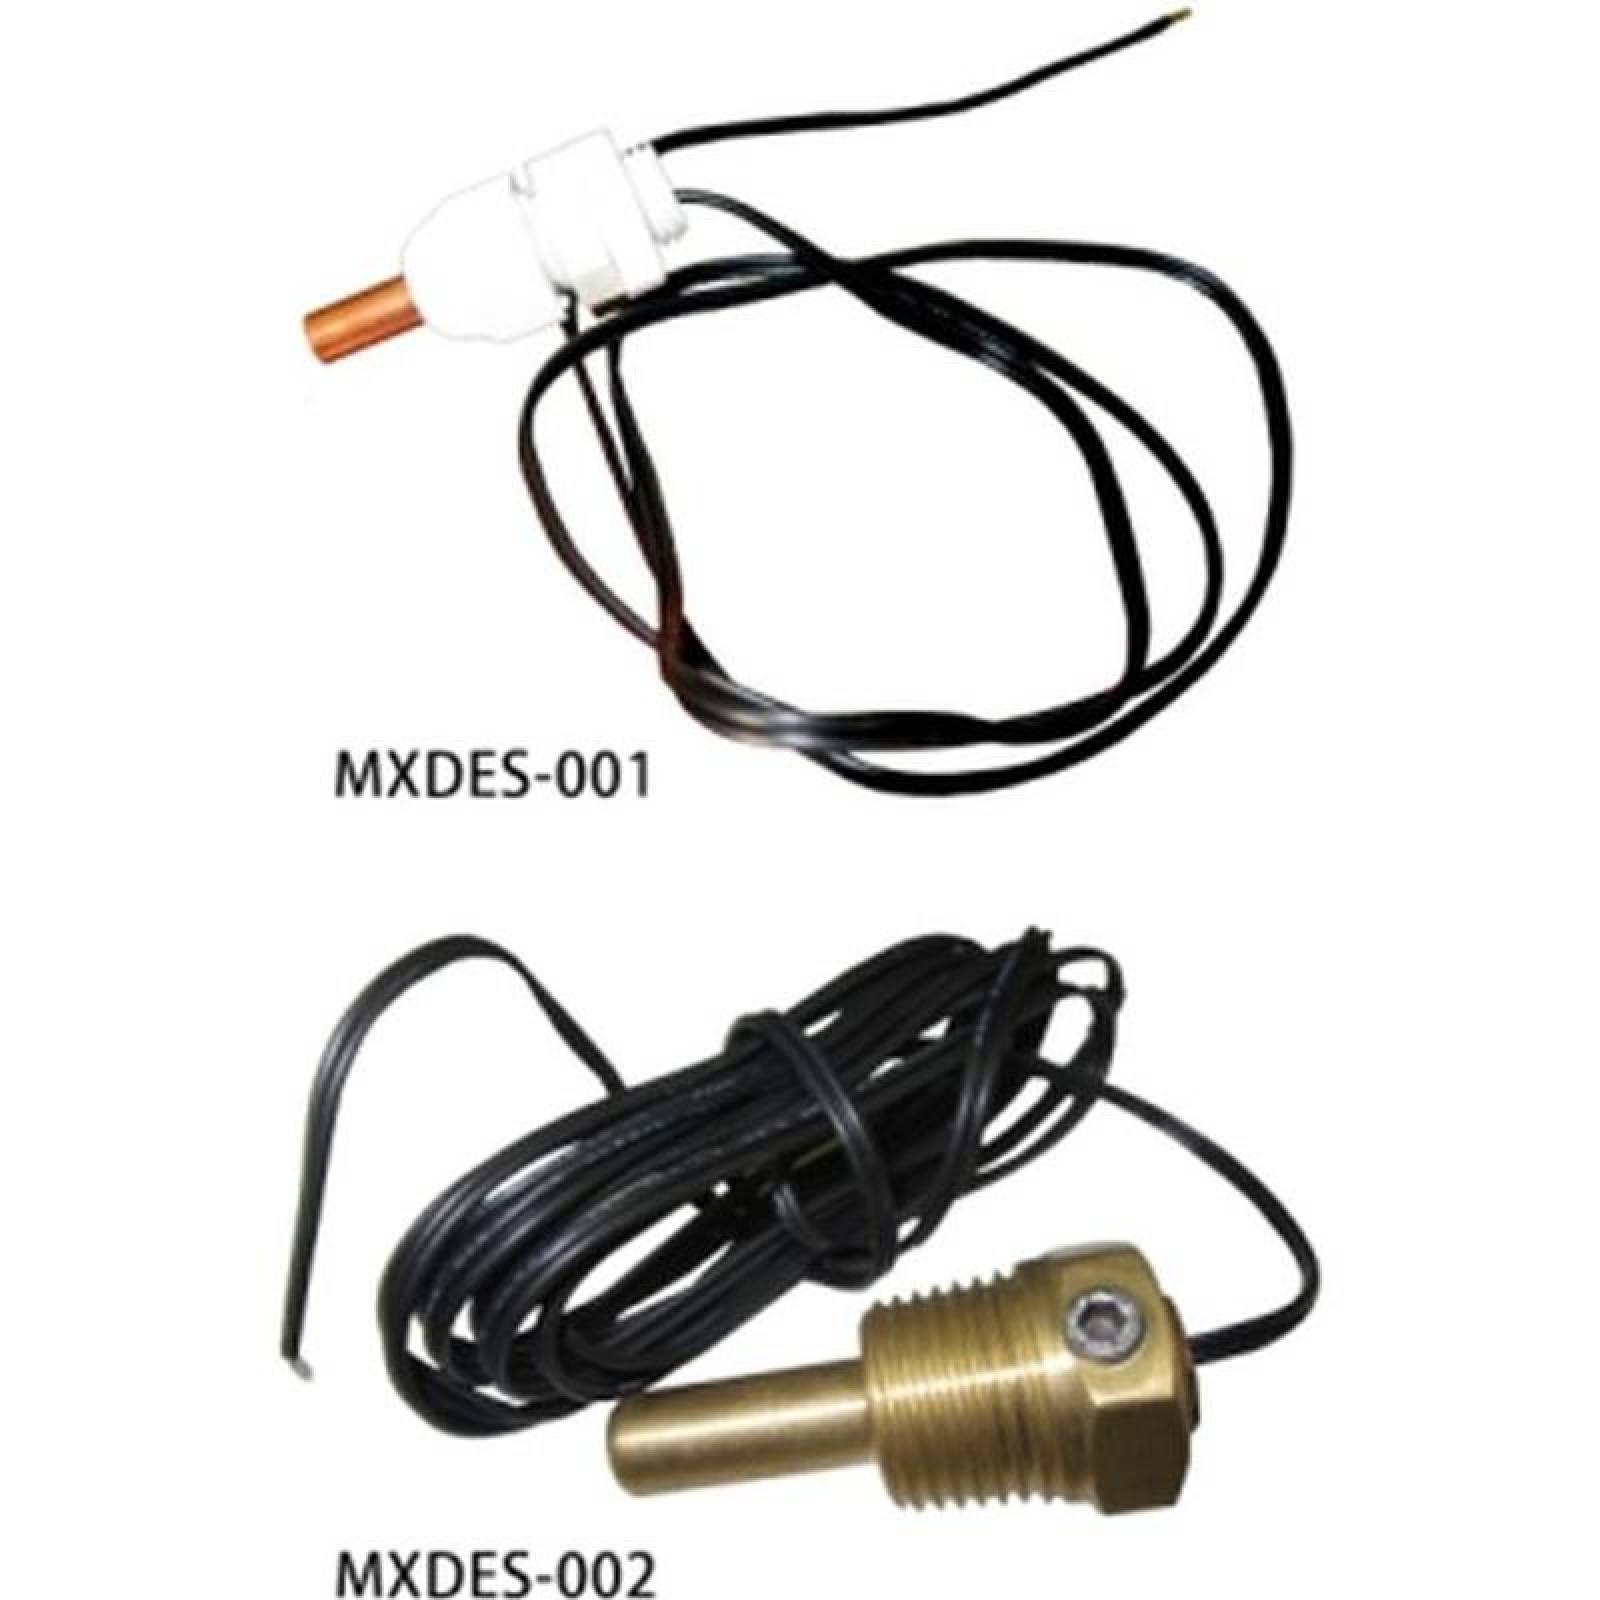 Monitoreo de Temperatura MXSES-001-12 Sensor Temp, Descarga -40 a 110C 50Kohm25C atornillado a la tub, SensDesc